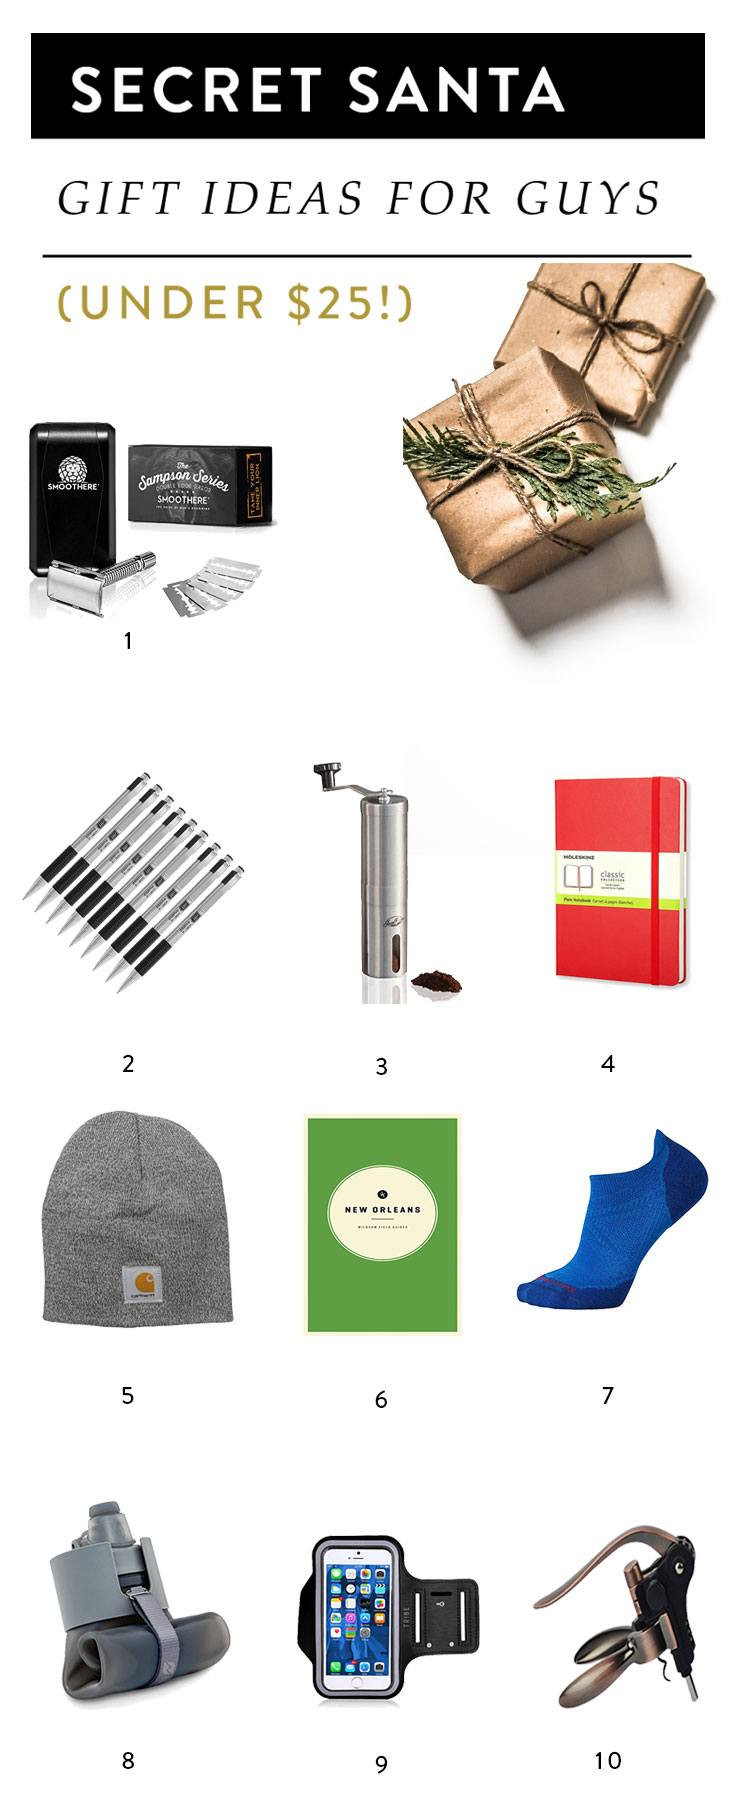 Best ideas about Secret Santa Gift Ideas For Guys
. Save or Pin 10 Secret Santa Gift Ideas for Guys Under $25 Now.